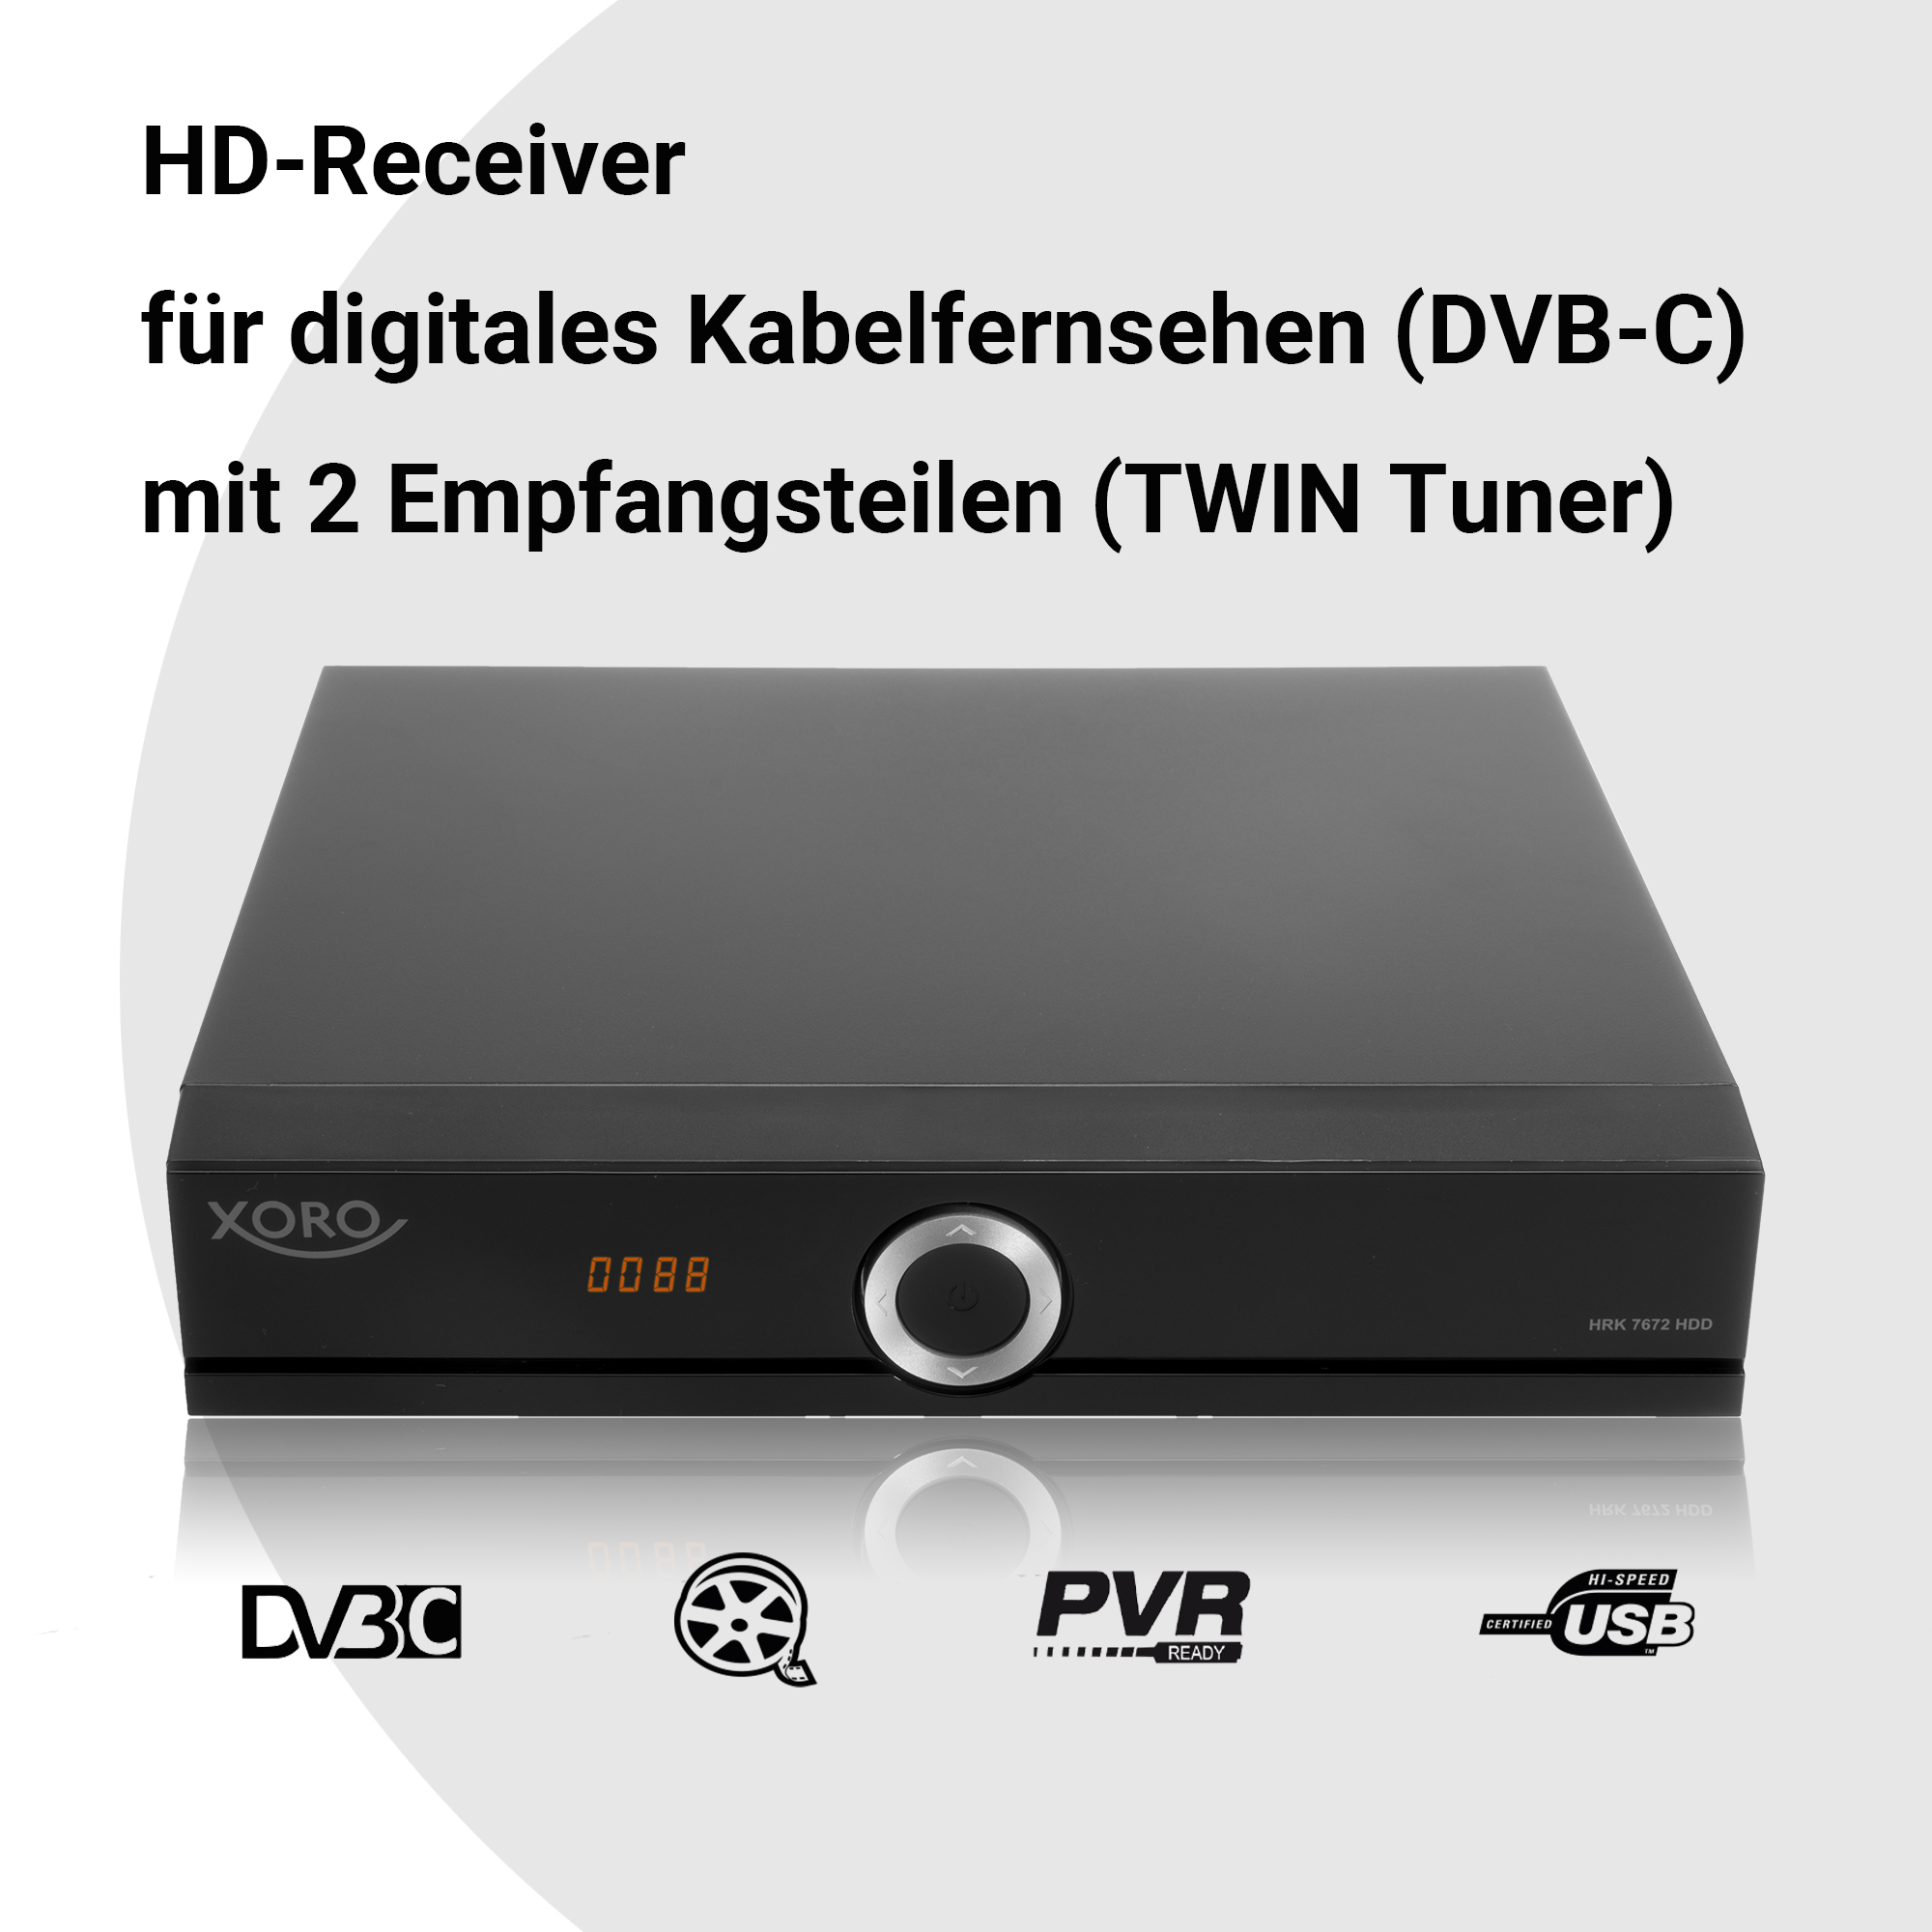 Kabelreceiver Ready, HDD 7672 0TB USB MiniSCART, XORO Tuner, HRK HD 12V) TWIN XORO PVR HDMI, DVB-C (HDTV Receiver DVB-C